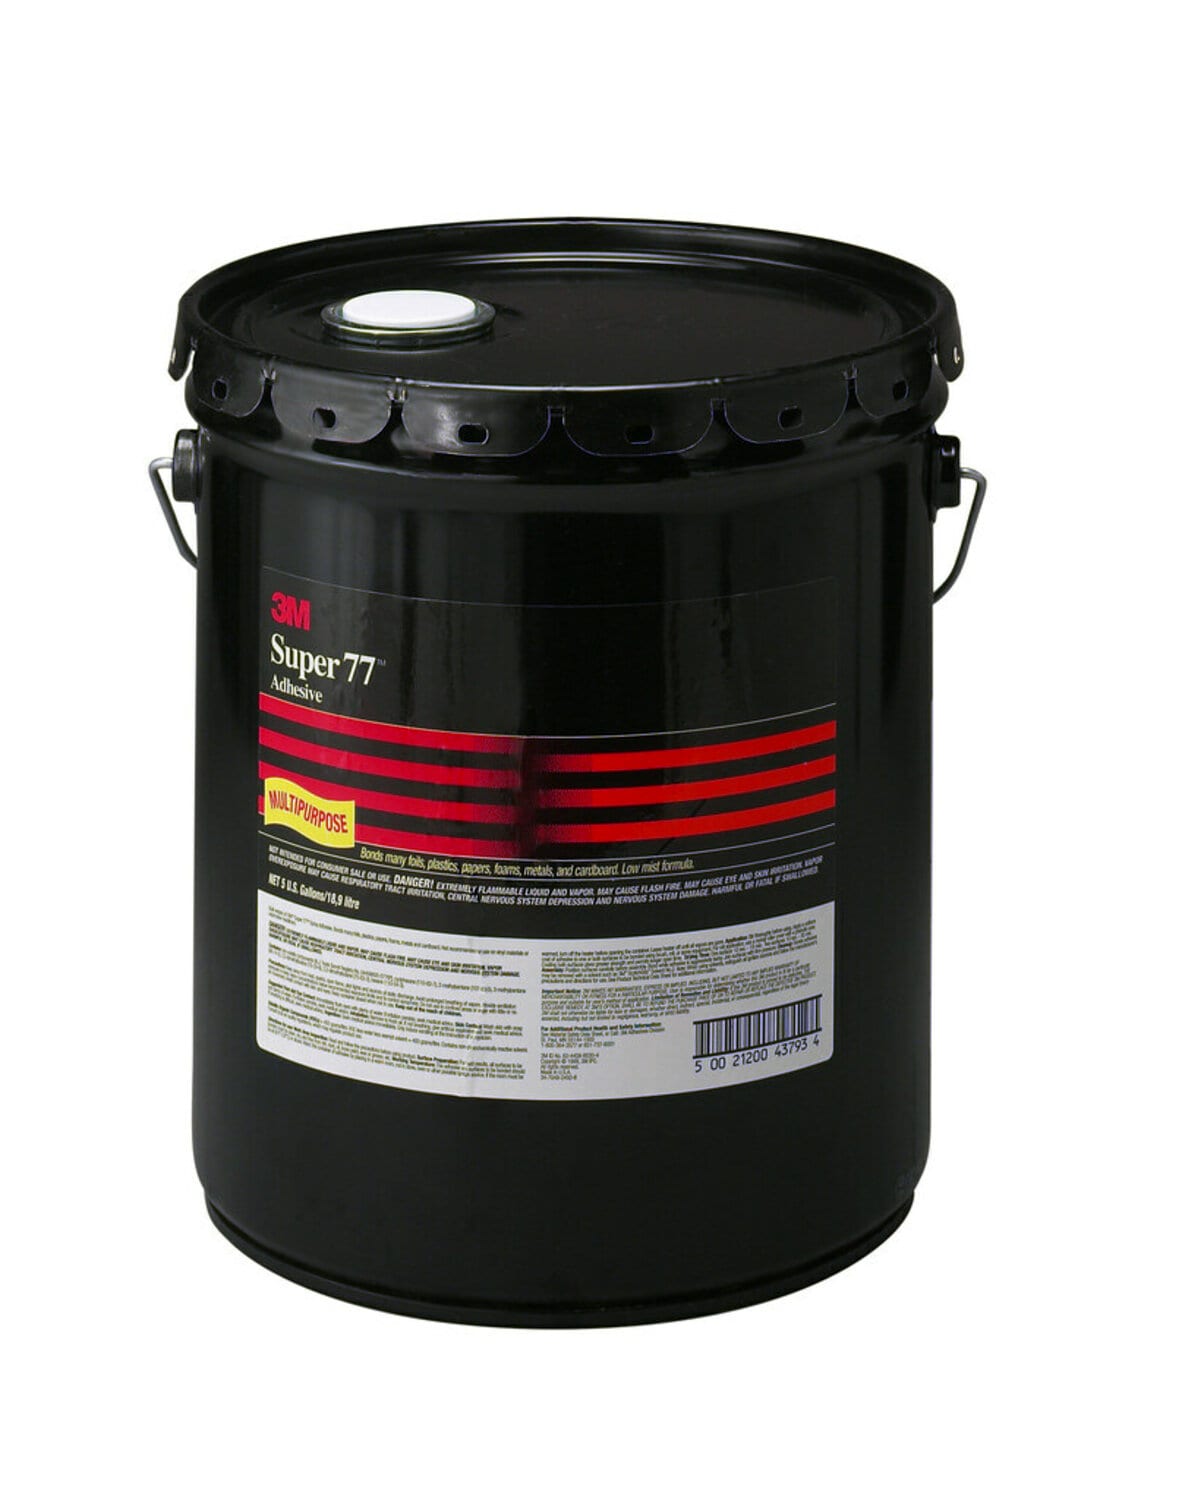 7010366330 - 3M Super 77 Multipurpose Spray Adhesive, Clear, 5 Gallon Drum (Pail)